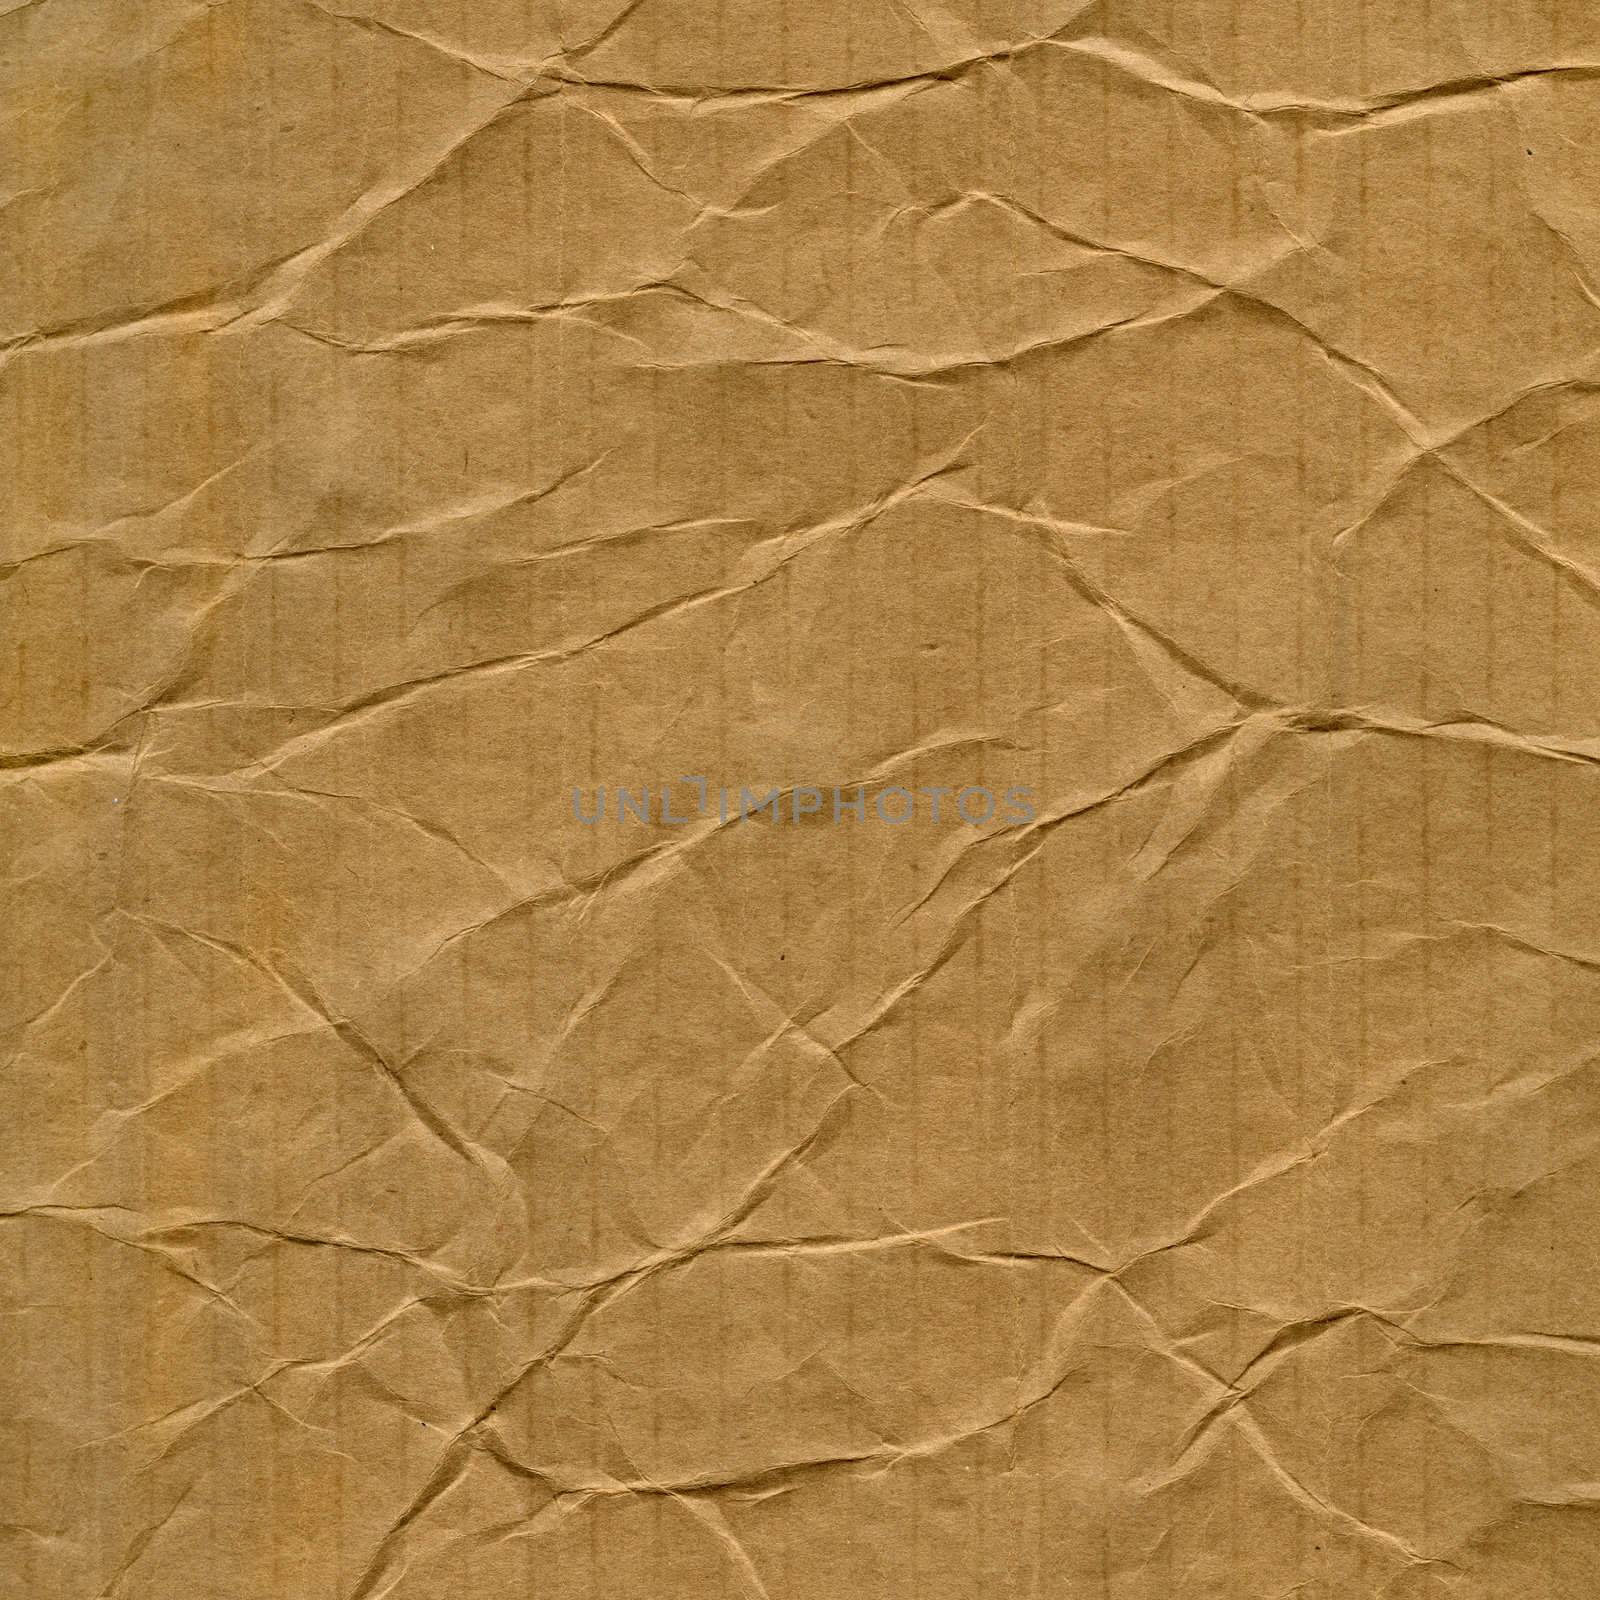 grunge, crumpled, wrinkled and creased cardboard high resolution background